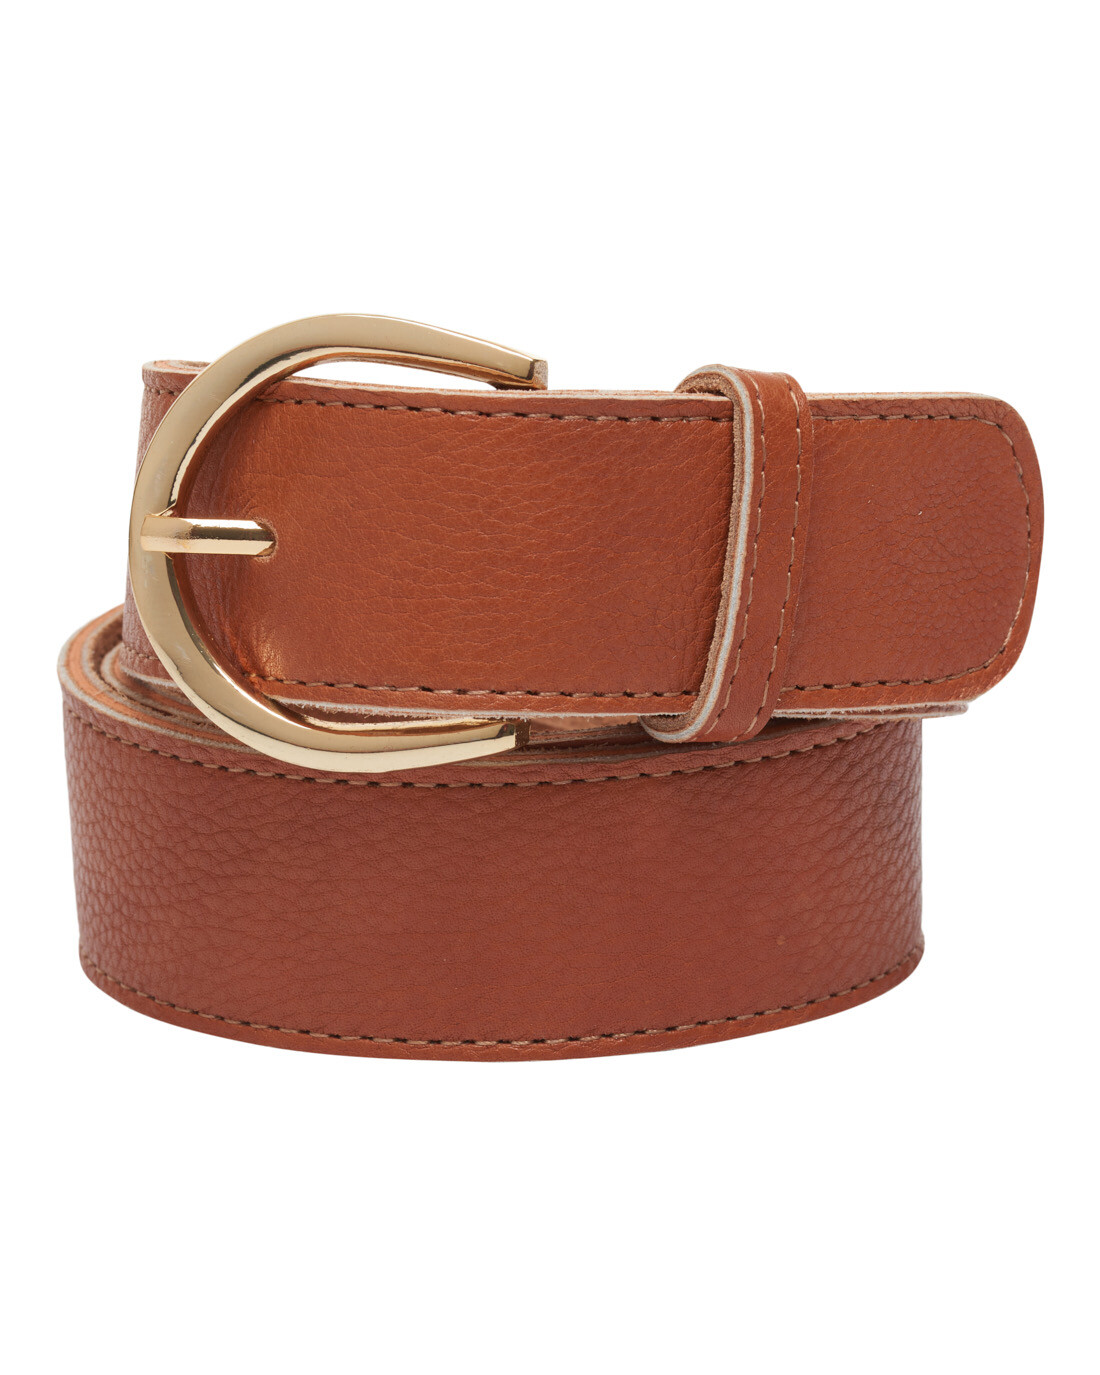 Anni Tan Leather Belt